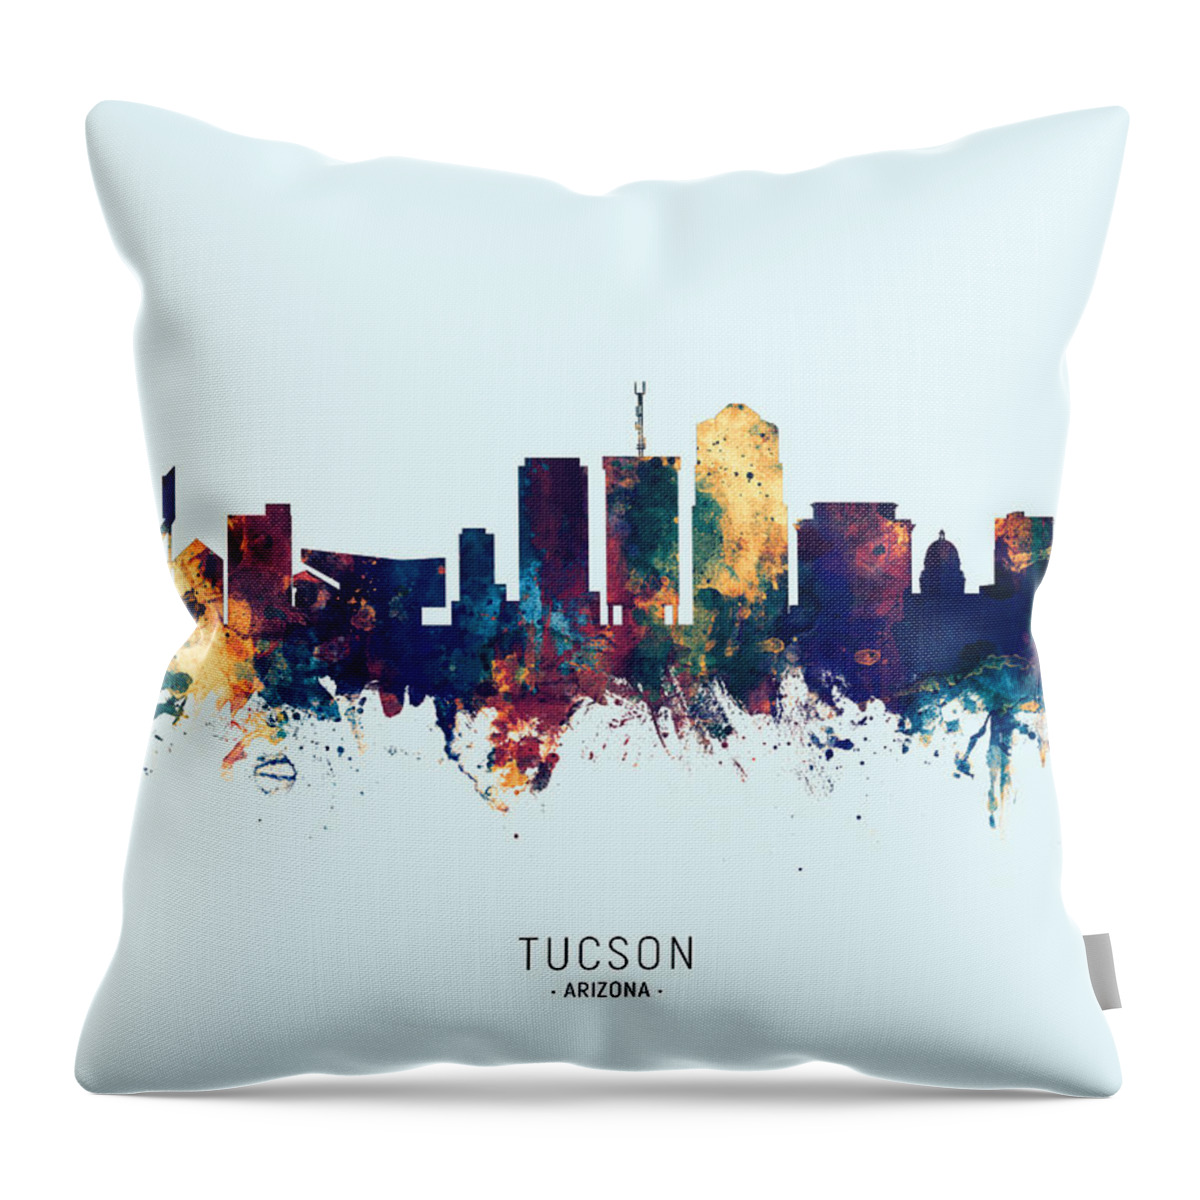 Tucson Throw Pillow featuring the digital art Tucson Arizona Skyline by Michael Tompsett